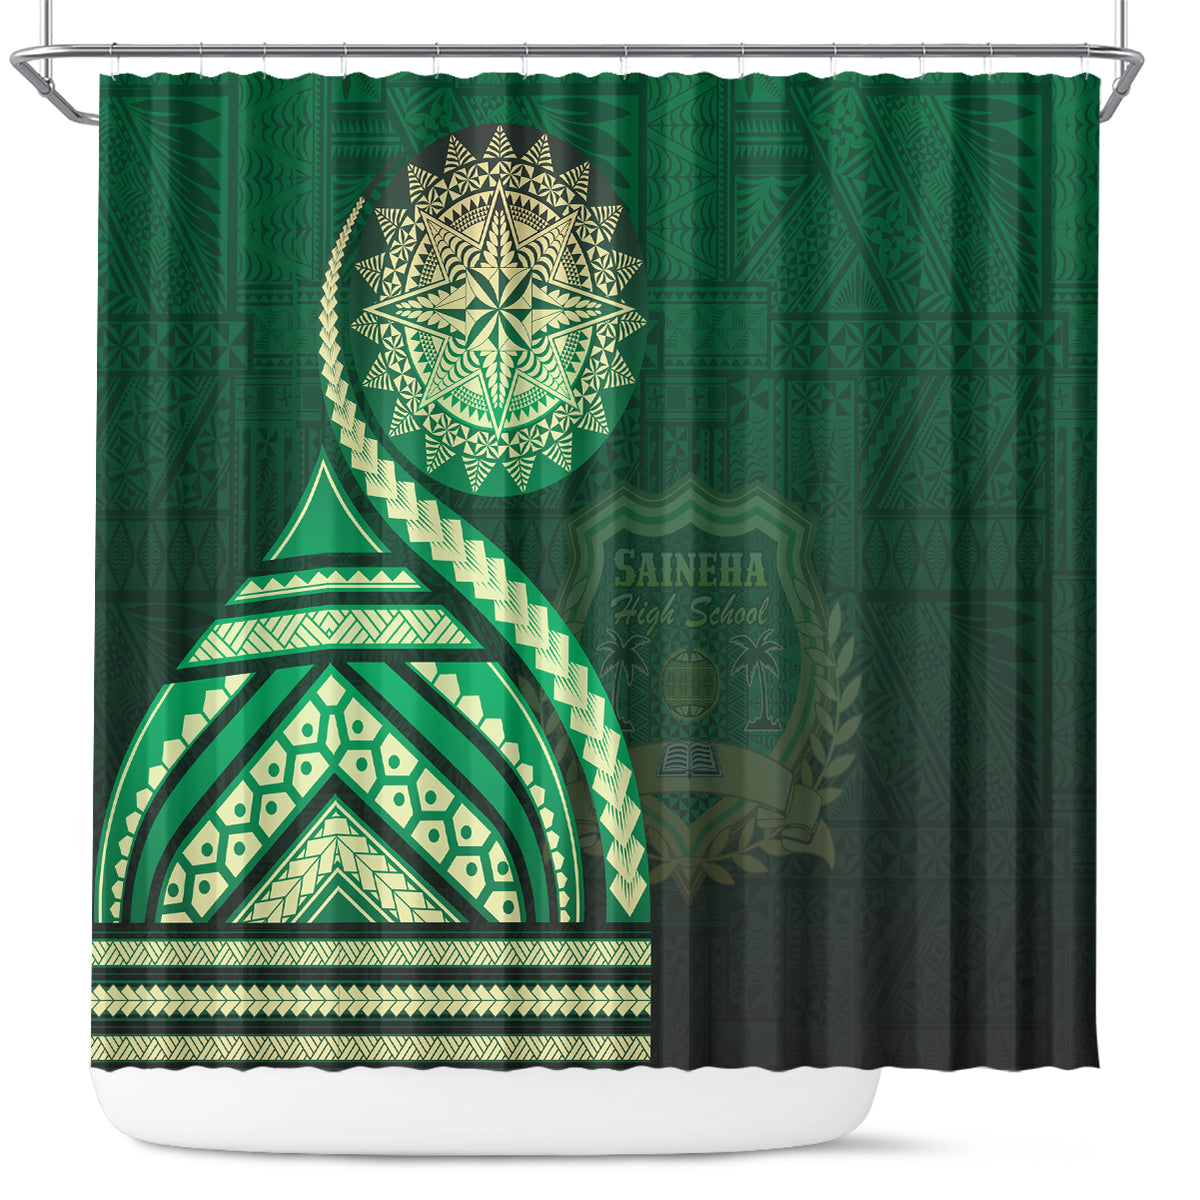 Saineha High School Shower Curtain Ngatu and Polynesian Pattern